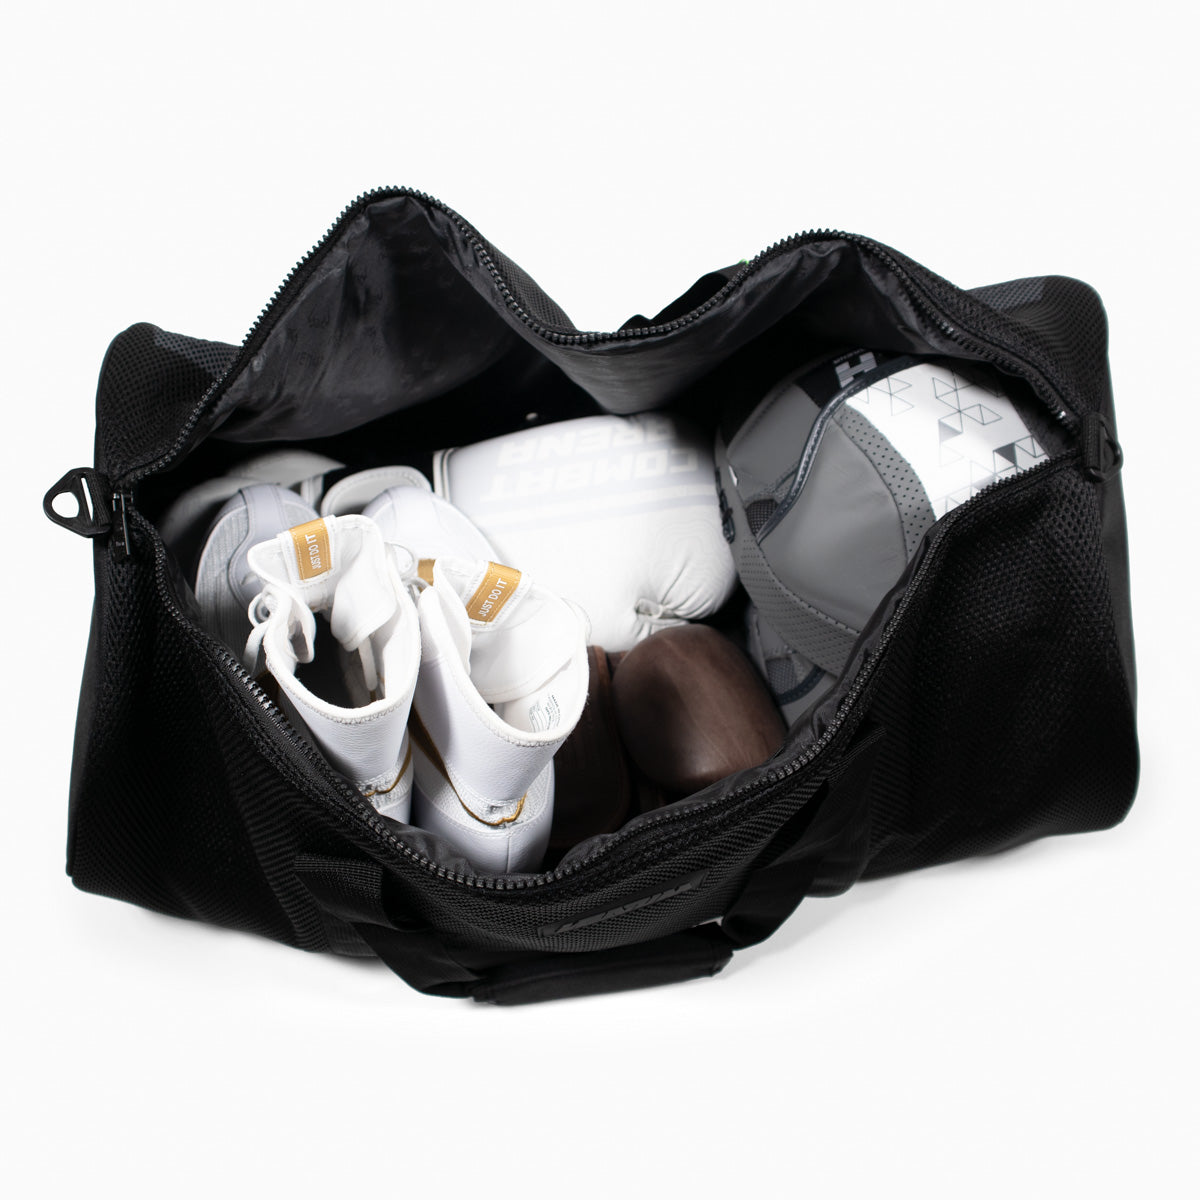 Sports bag Venum Connect XL